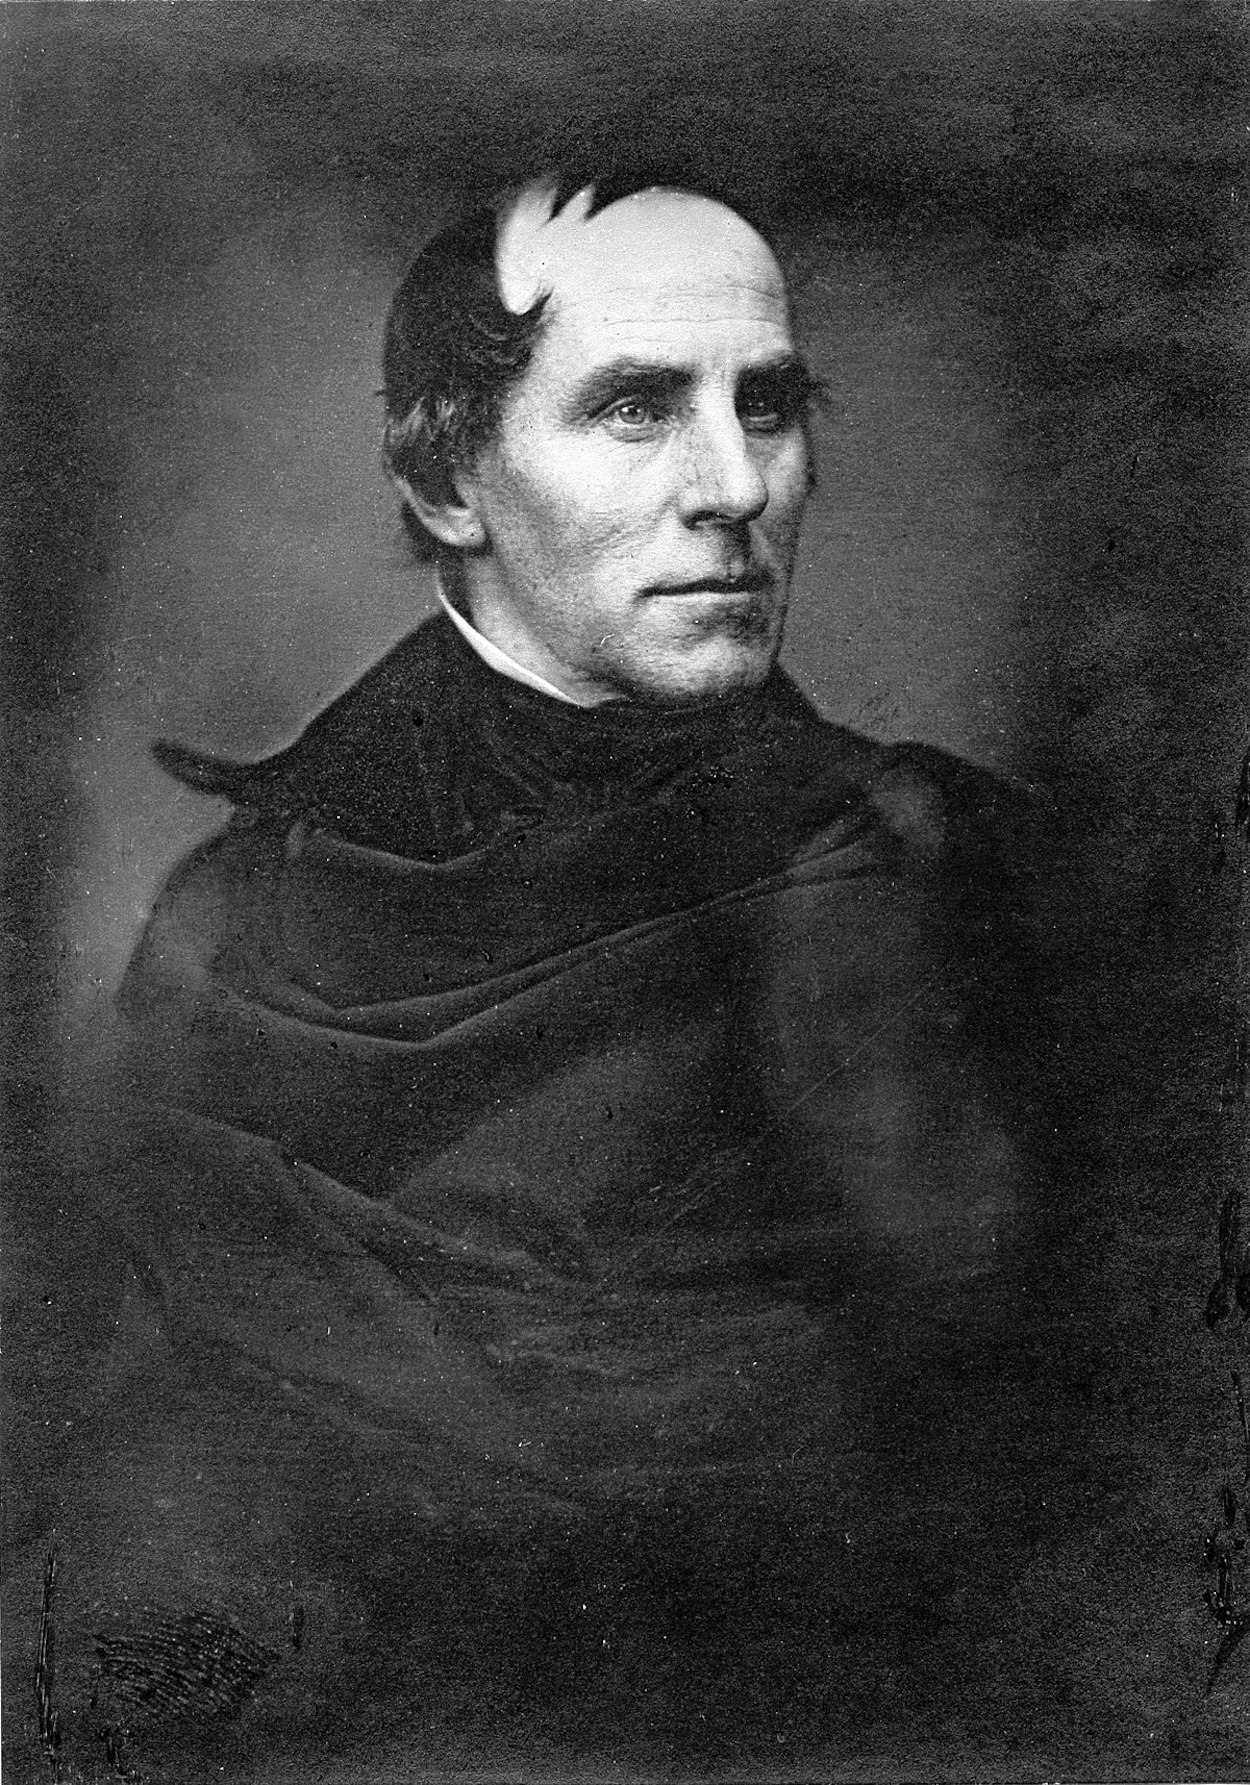 Thomas Cole - 1 de febrero de 1801 - 11 de febrero de 1848